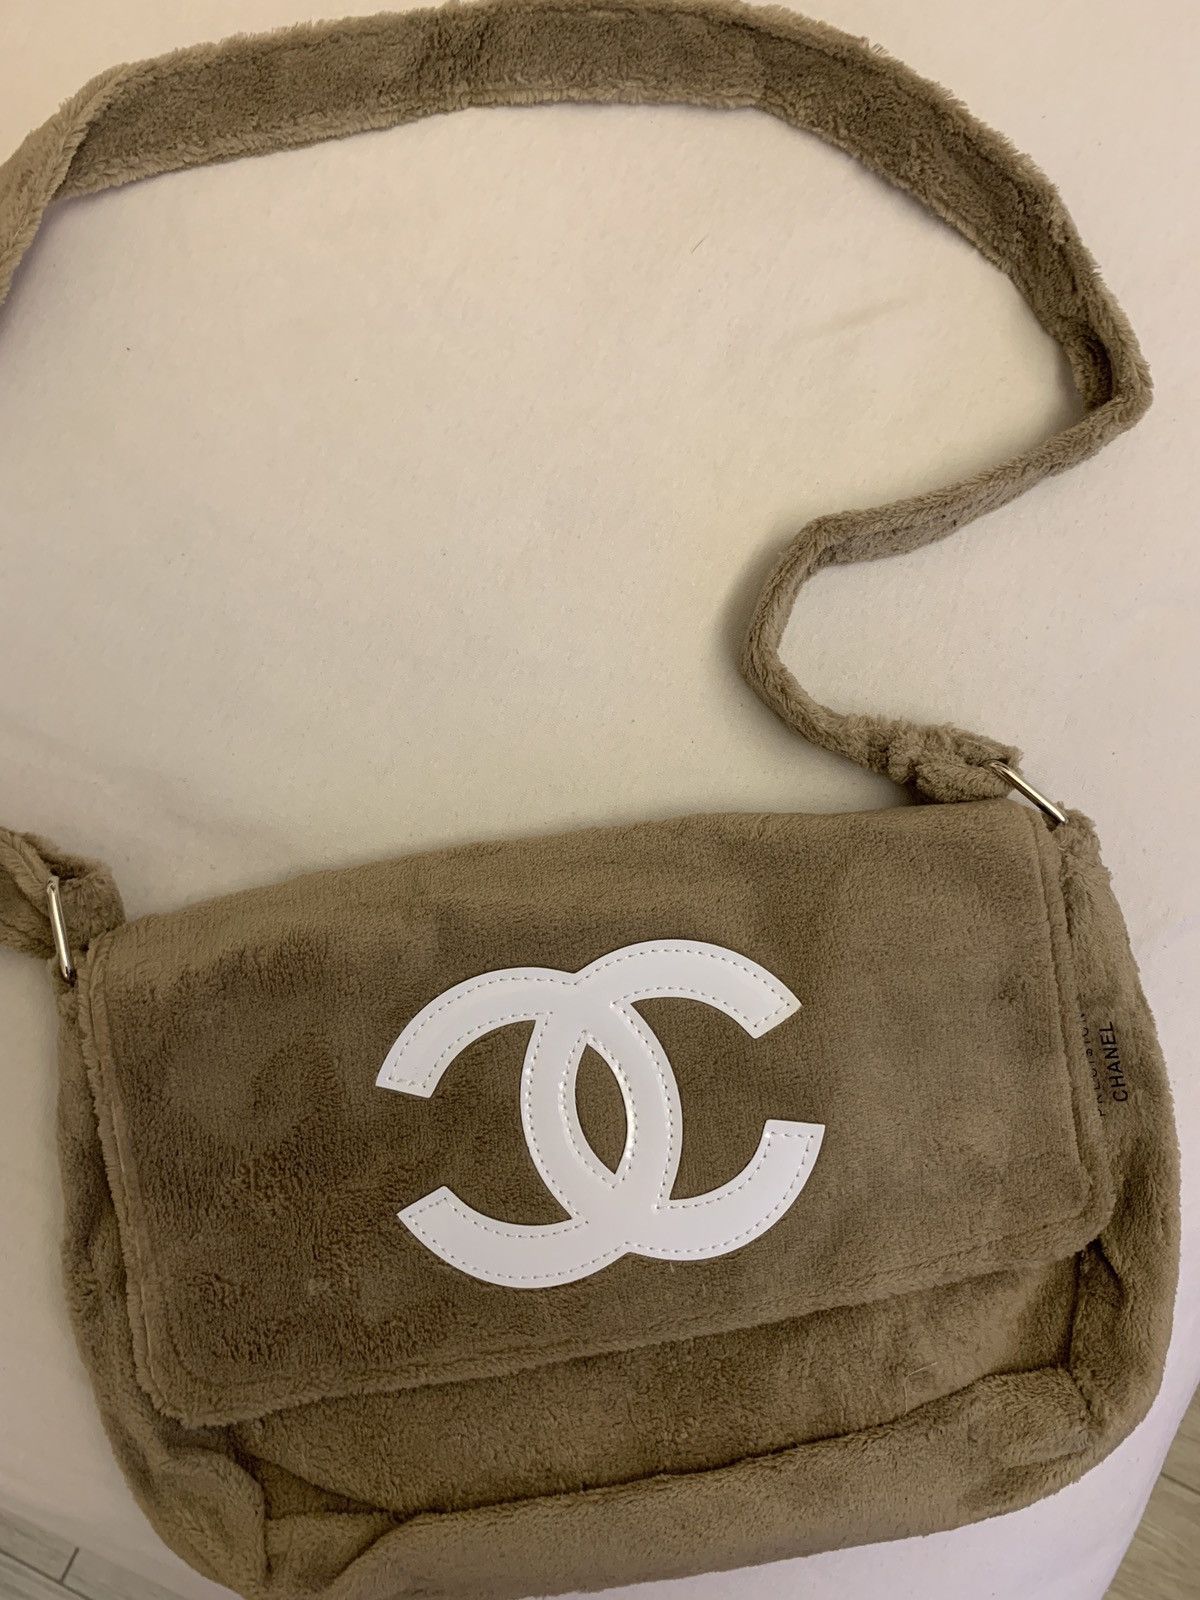 Chanel precision sling bag